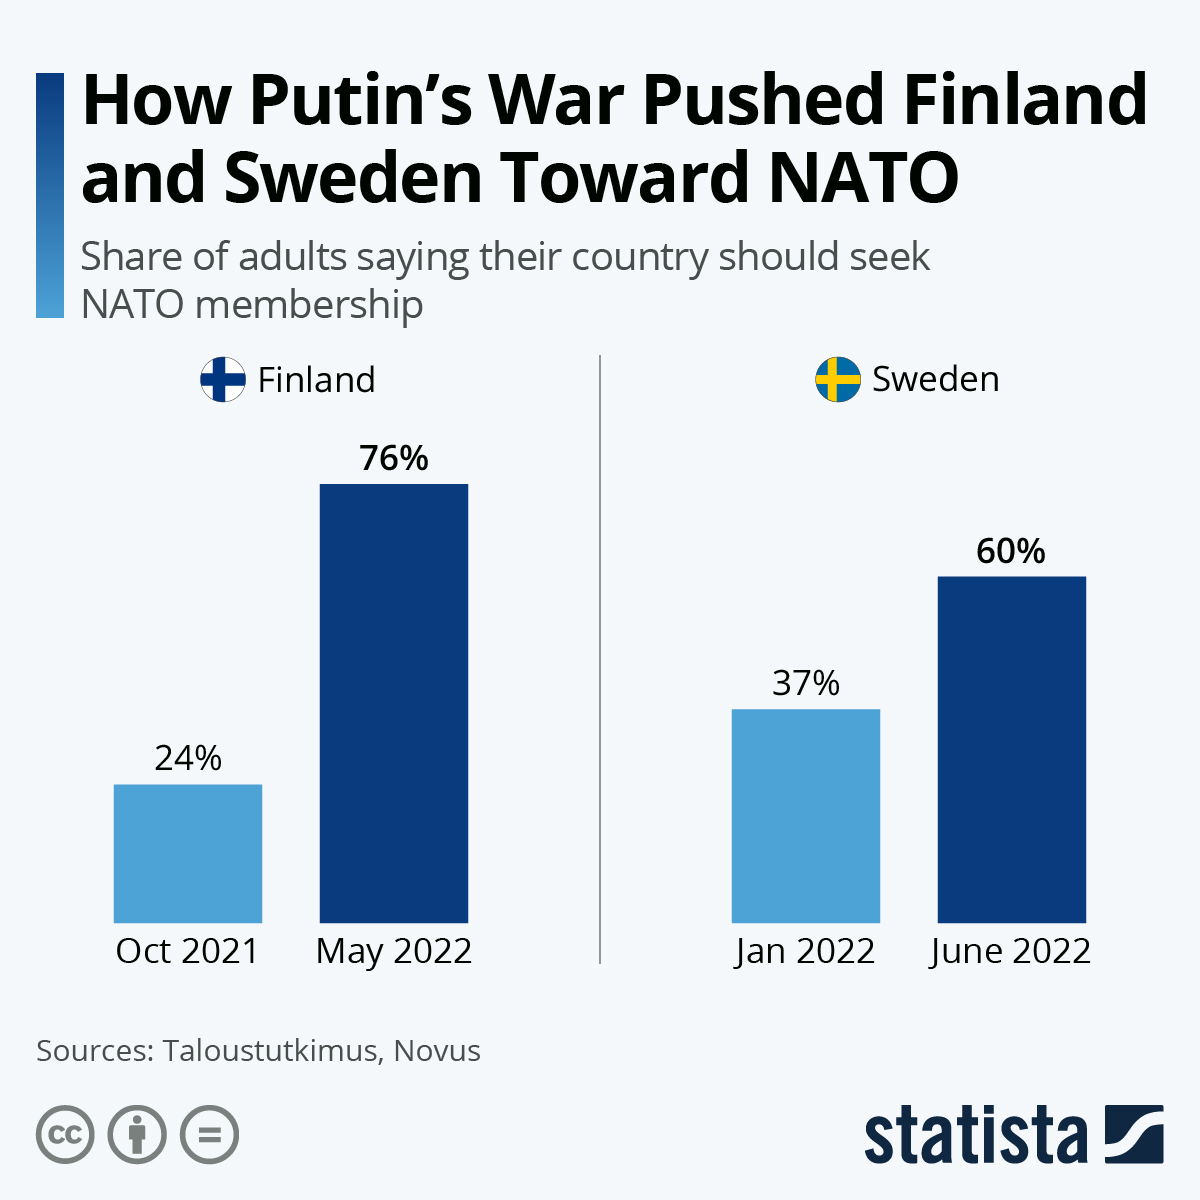 Historic Event, Finland and Sweden NATO Accession Protocols are Signed, Defense Express